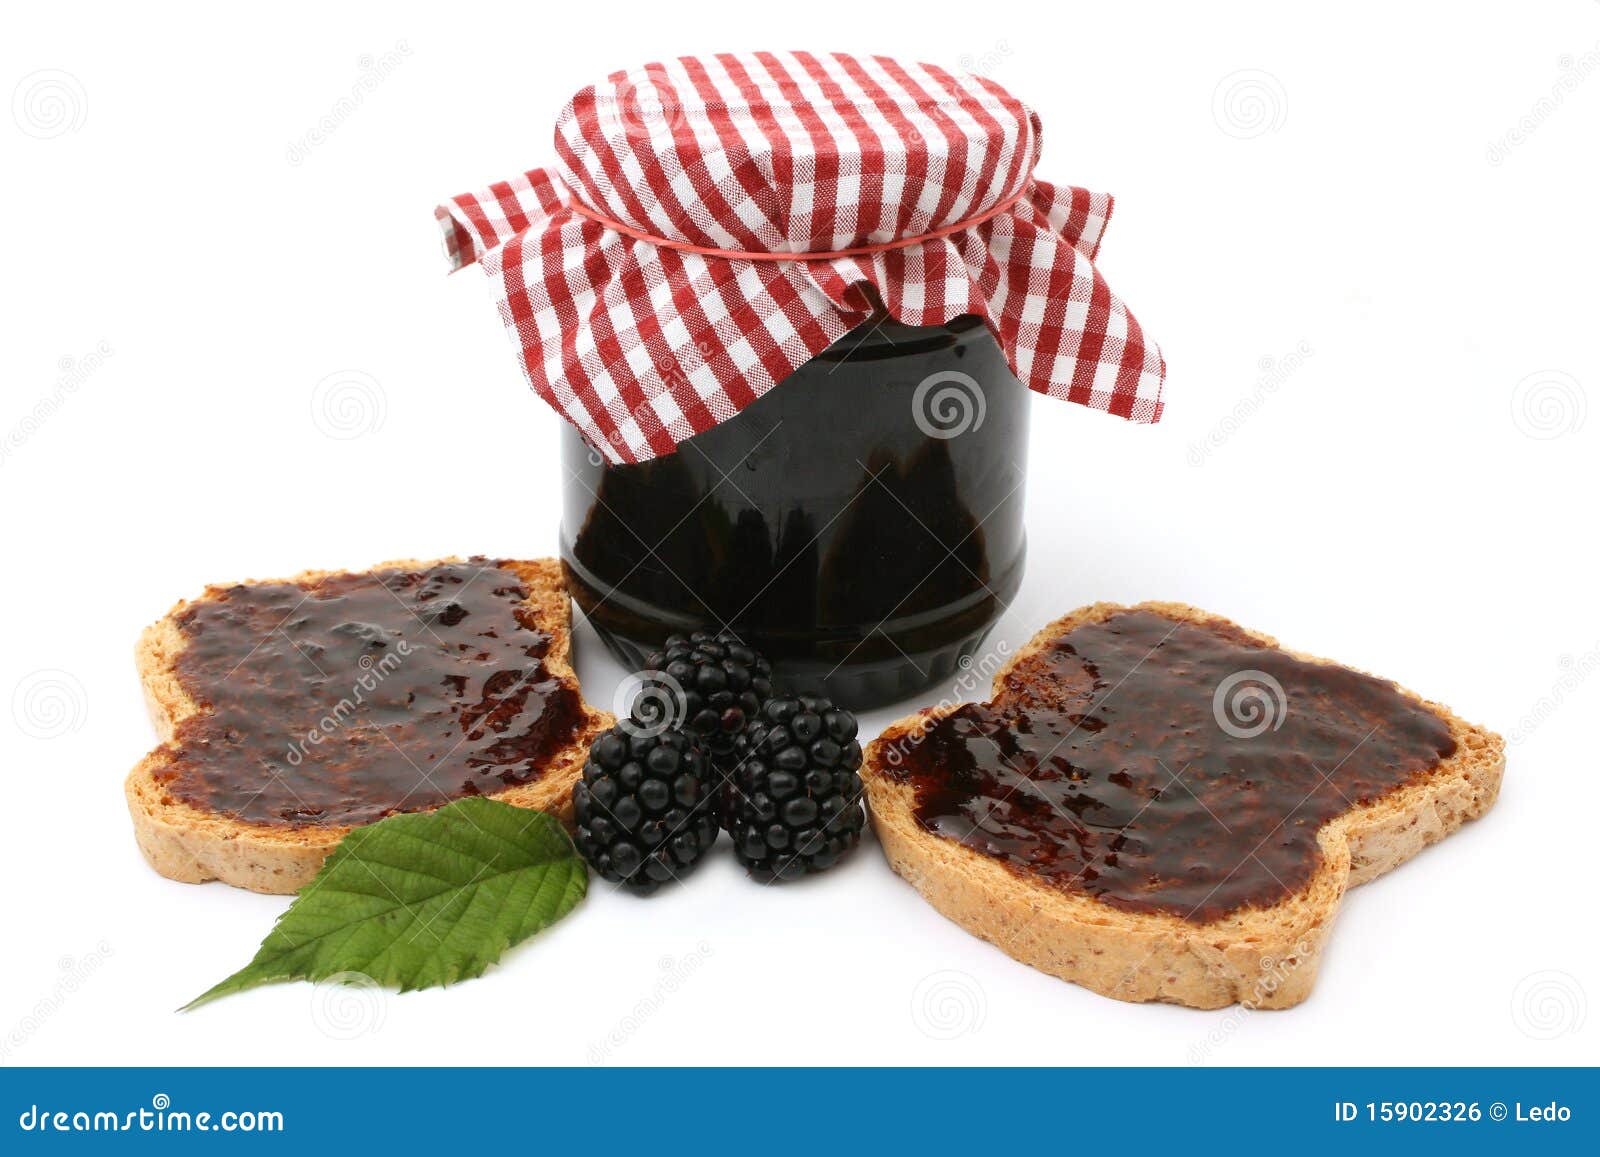 blackberry marmalade